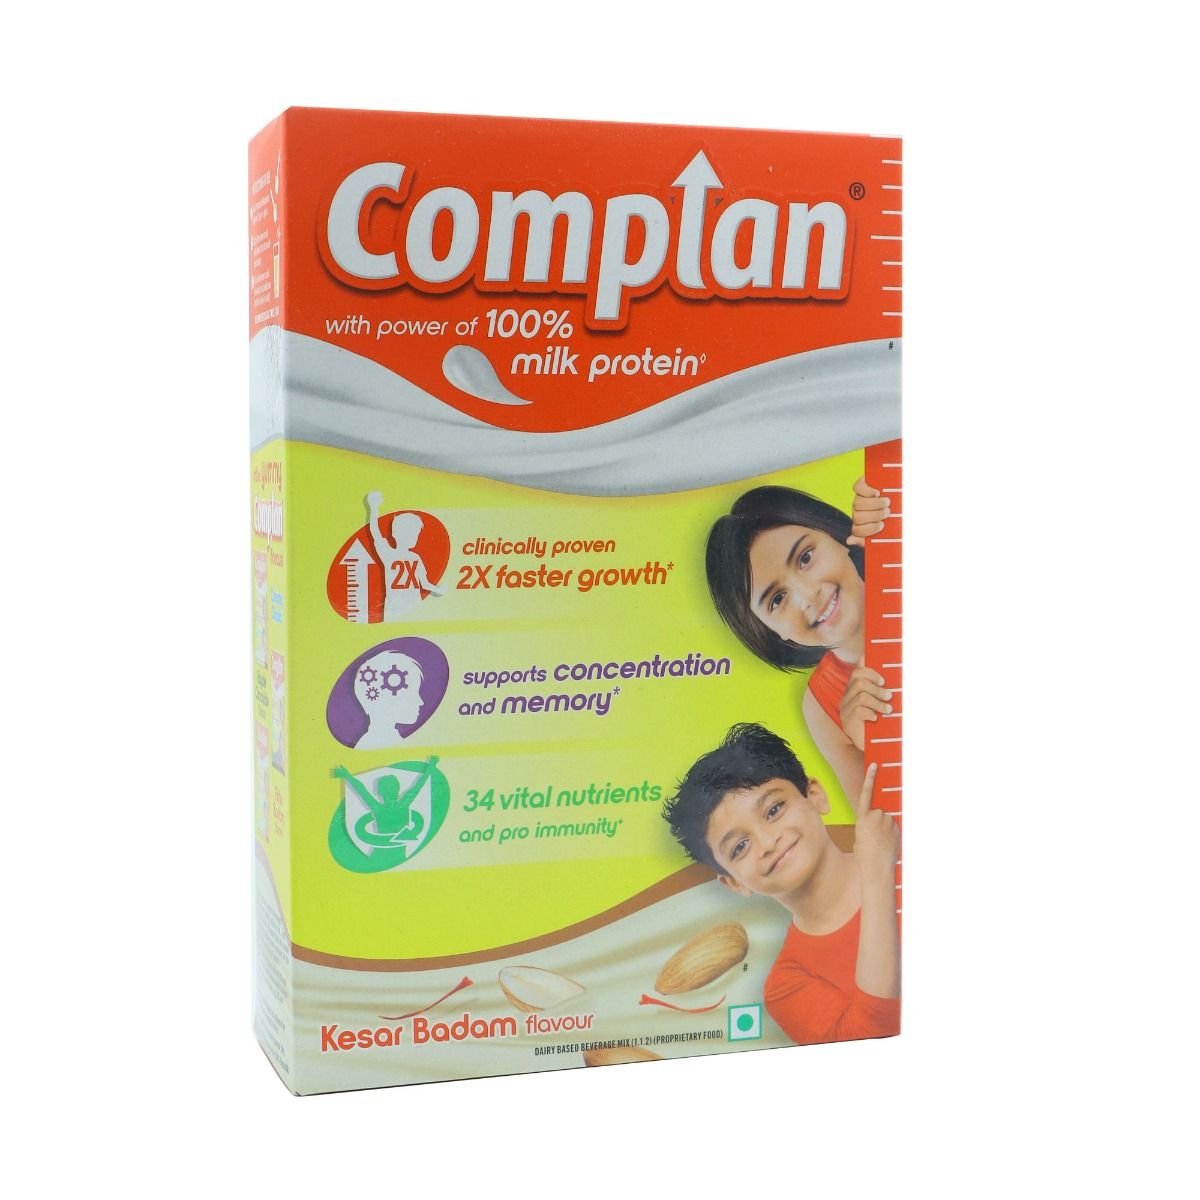 Buy Complan Kesar Badam Flavour Nutrition Drink Powder, 500 gm Refill Pack Online